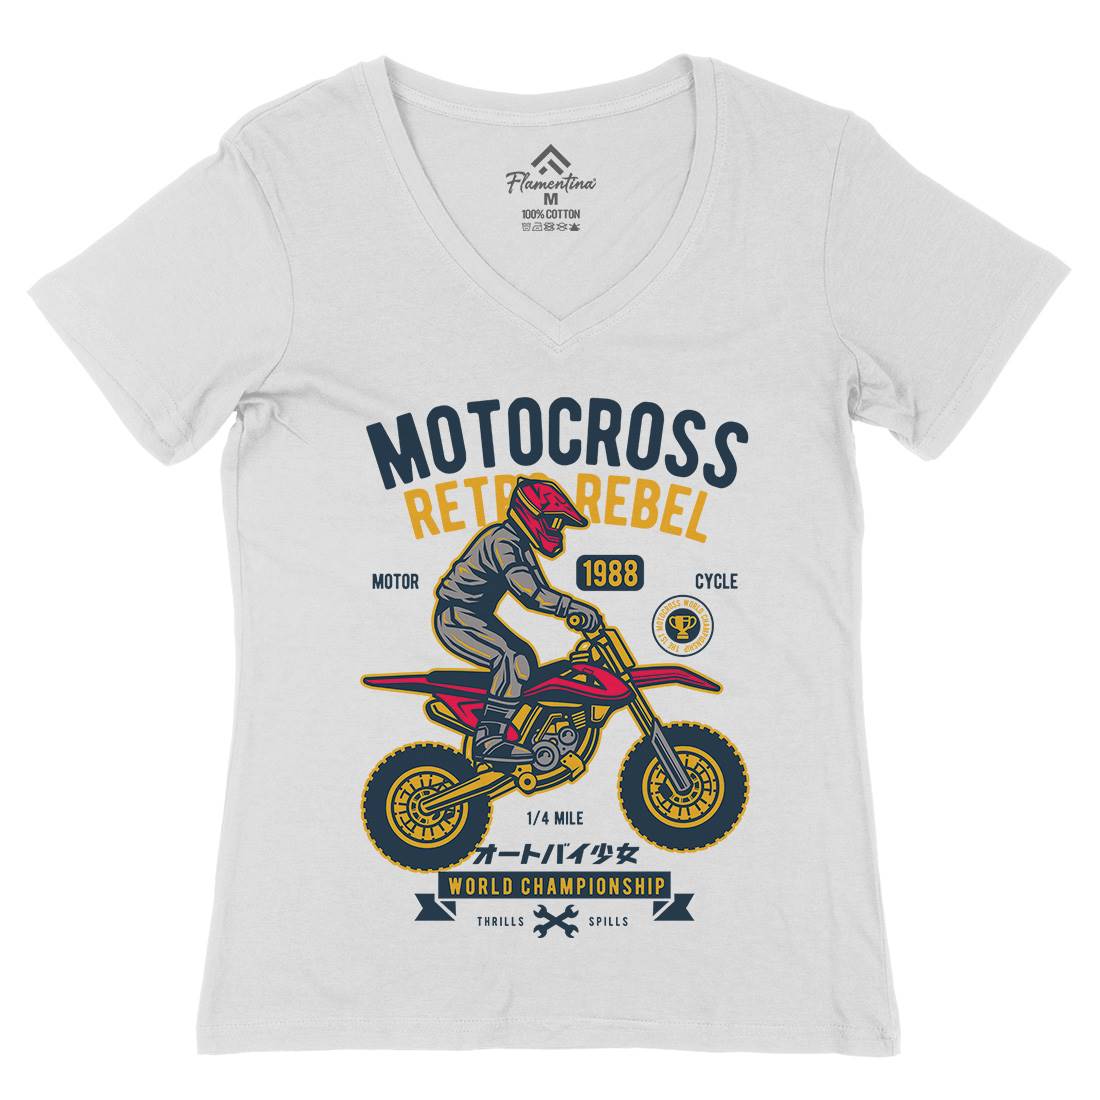 Motocross Retro Rebel Womens Organic V-Neck T-Shirt Motorcycles D553